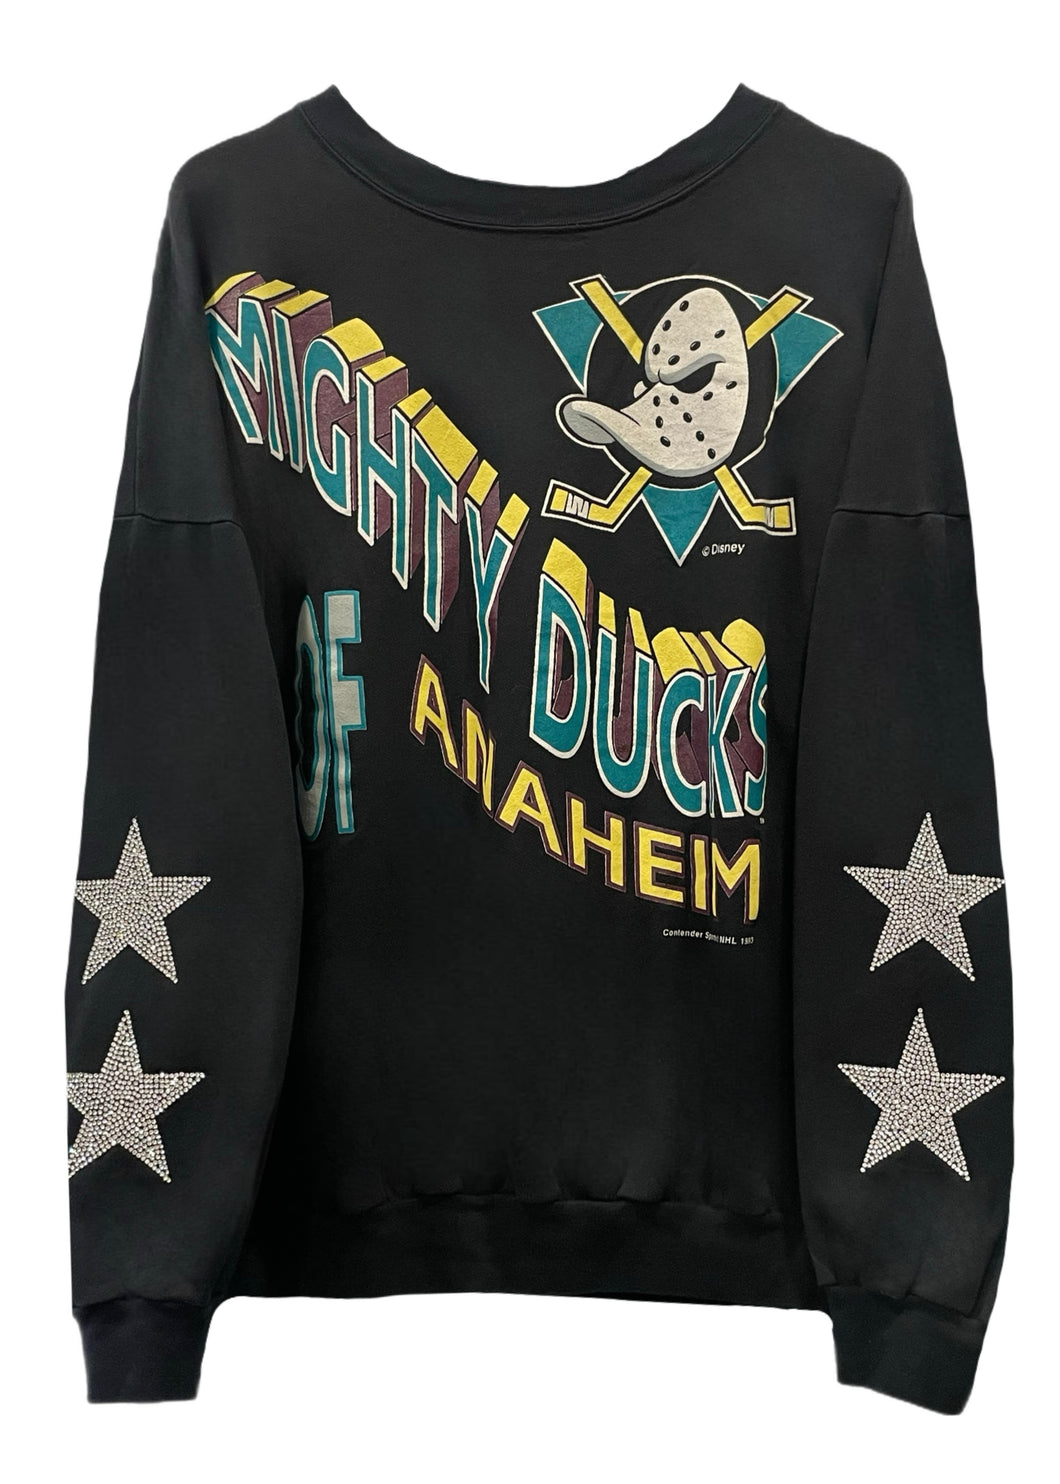 Anaheim Ducks, Hockey One of a KIND Vintage “Mighty Ducks” Rare Find Sweatshirt with Crystal Star Design